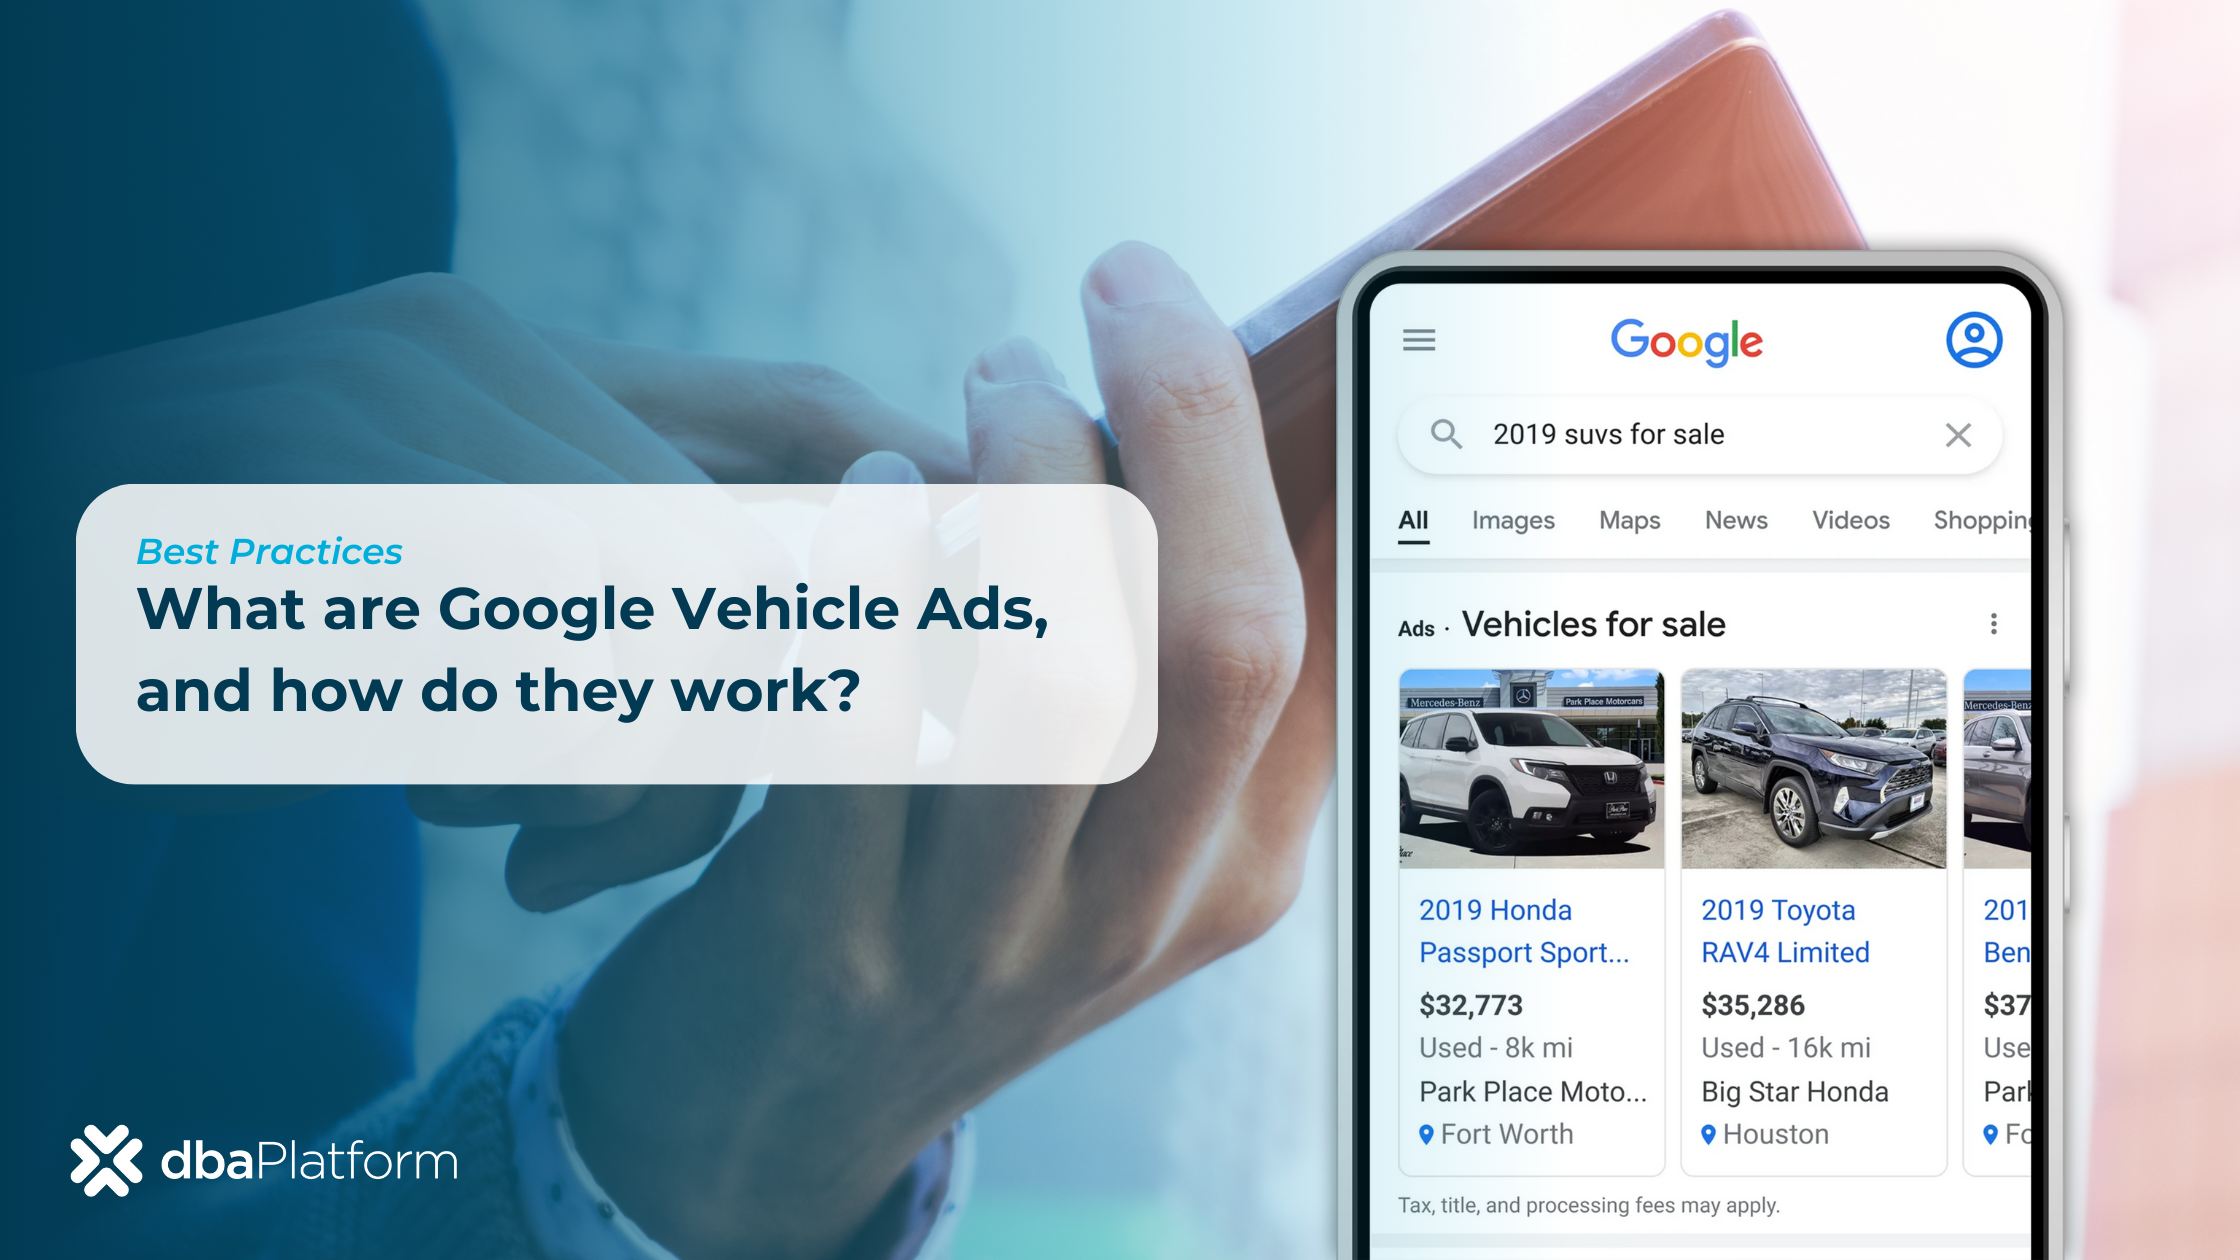 Vehicle Ads on Google powered by dbaPlatform.